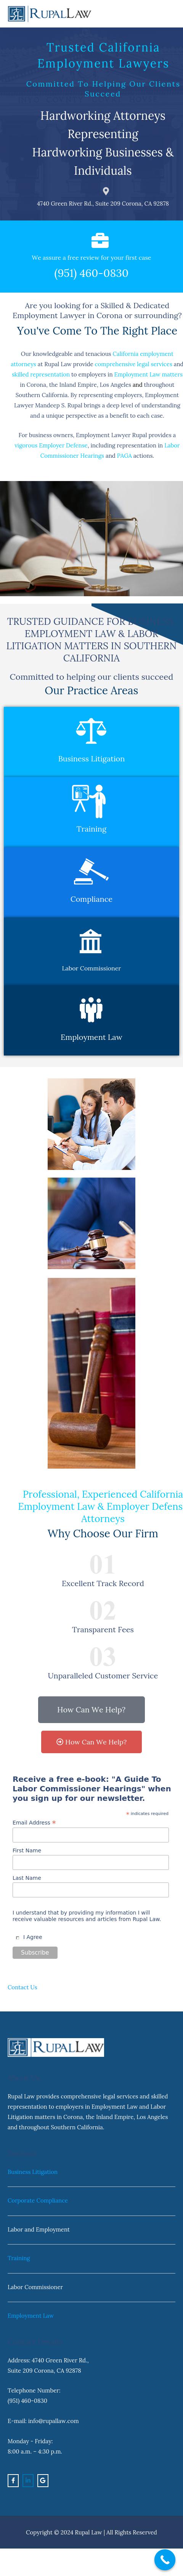 Rupal Law - Chino Hills CA Lawyers